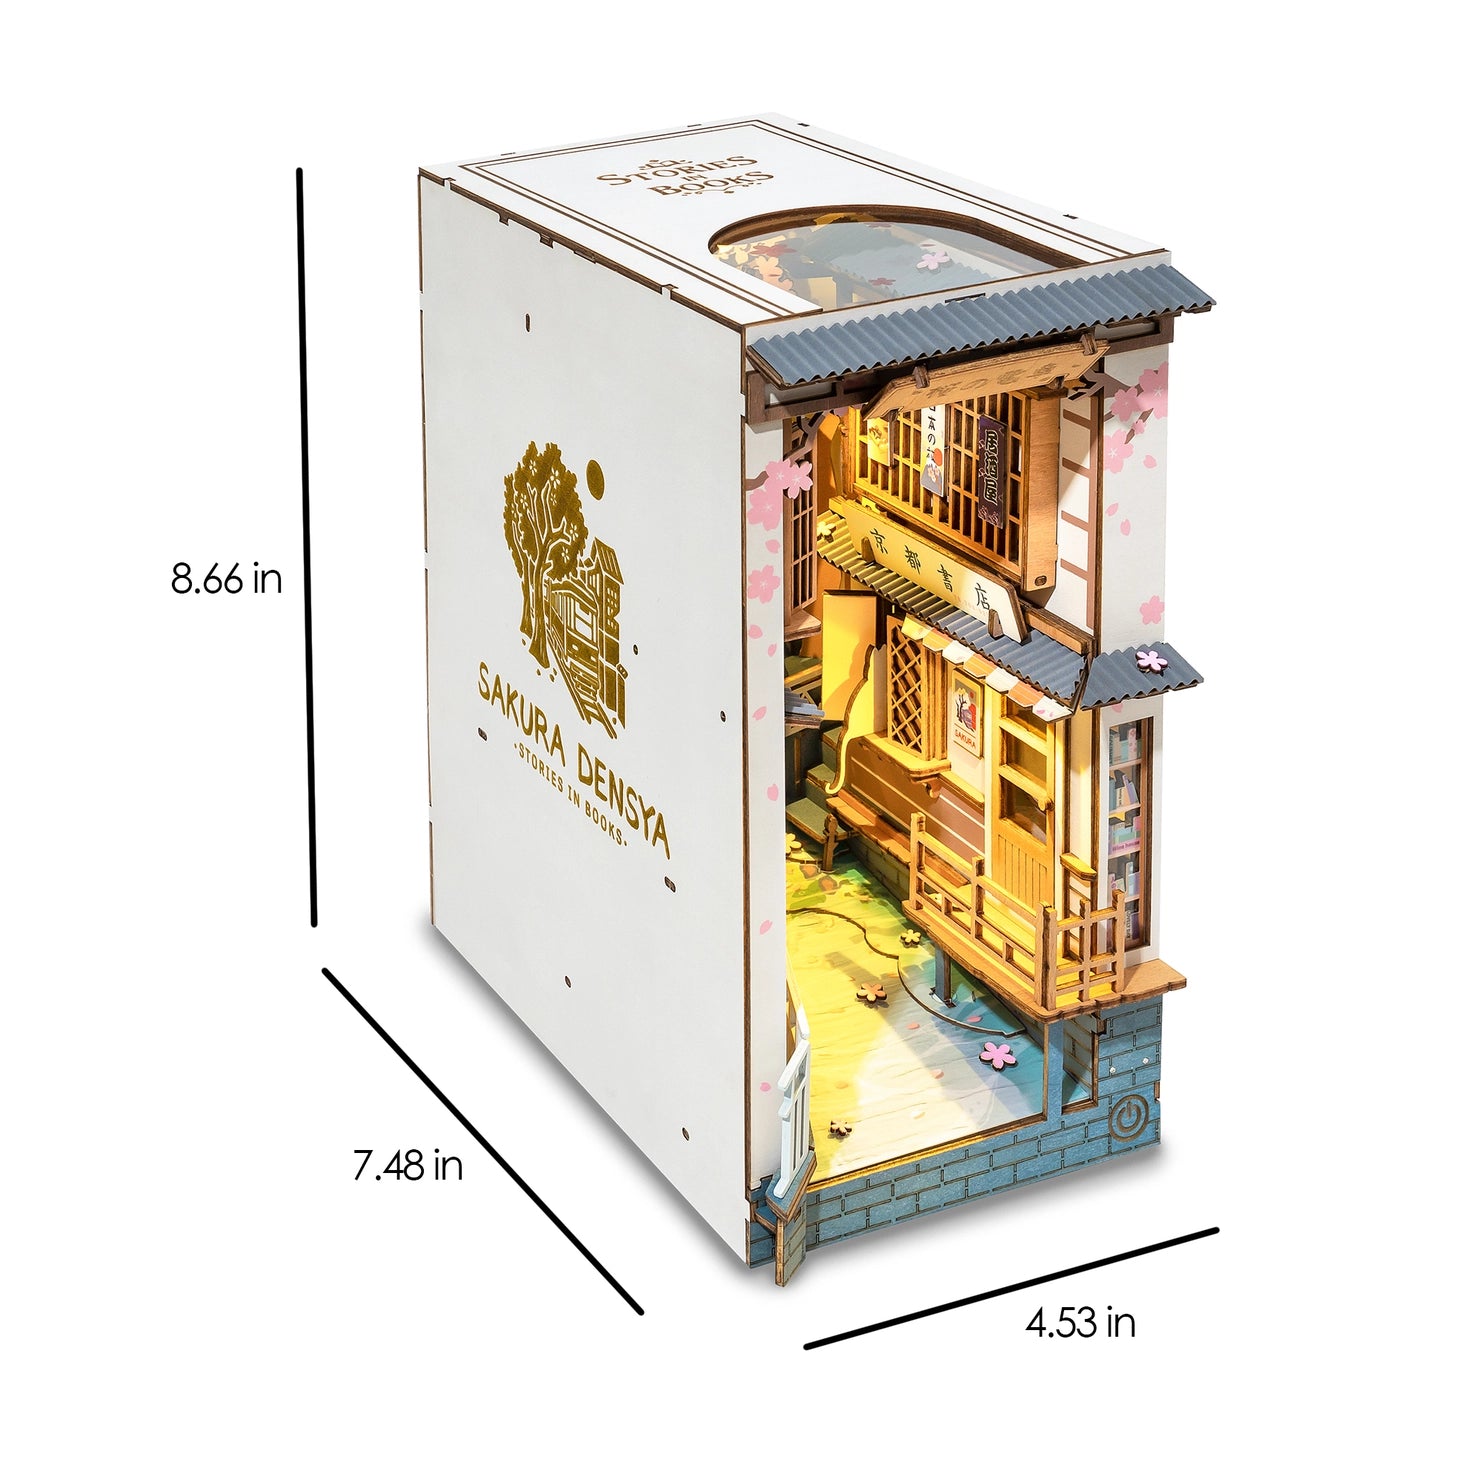 Sakura Densya Book Nook Diorama Kit